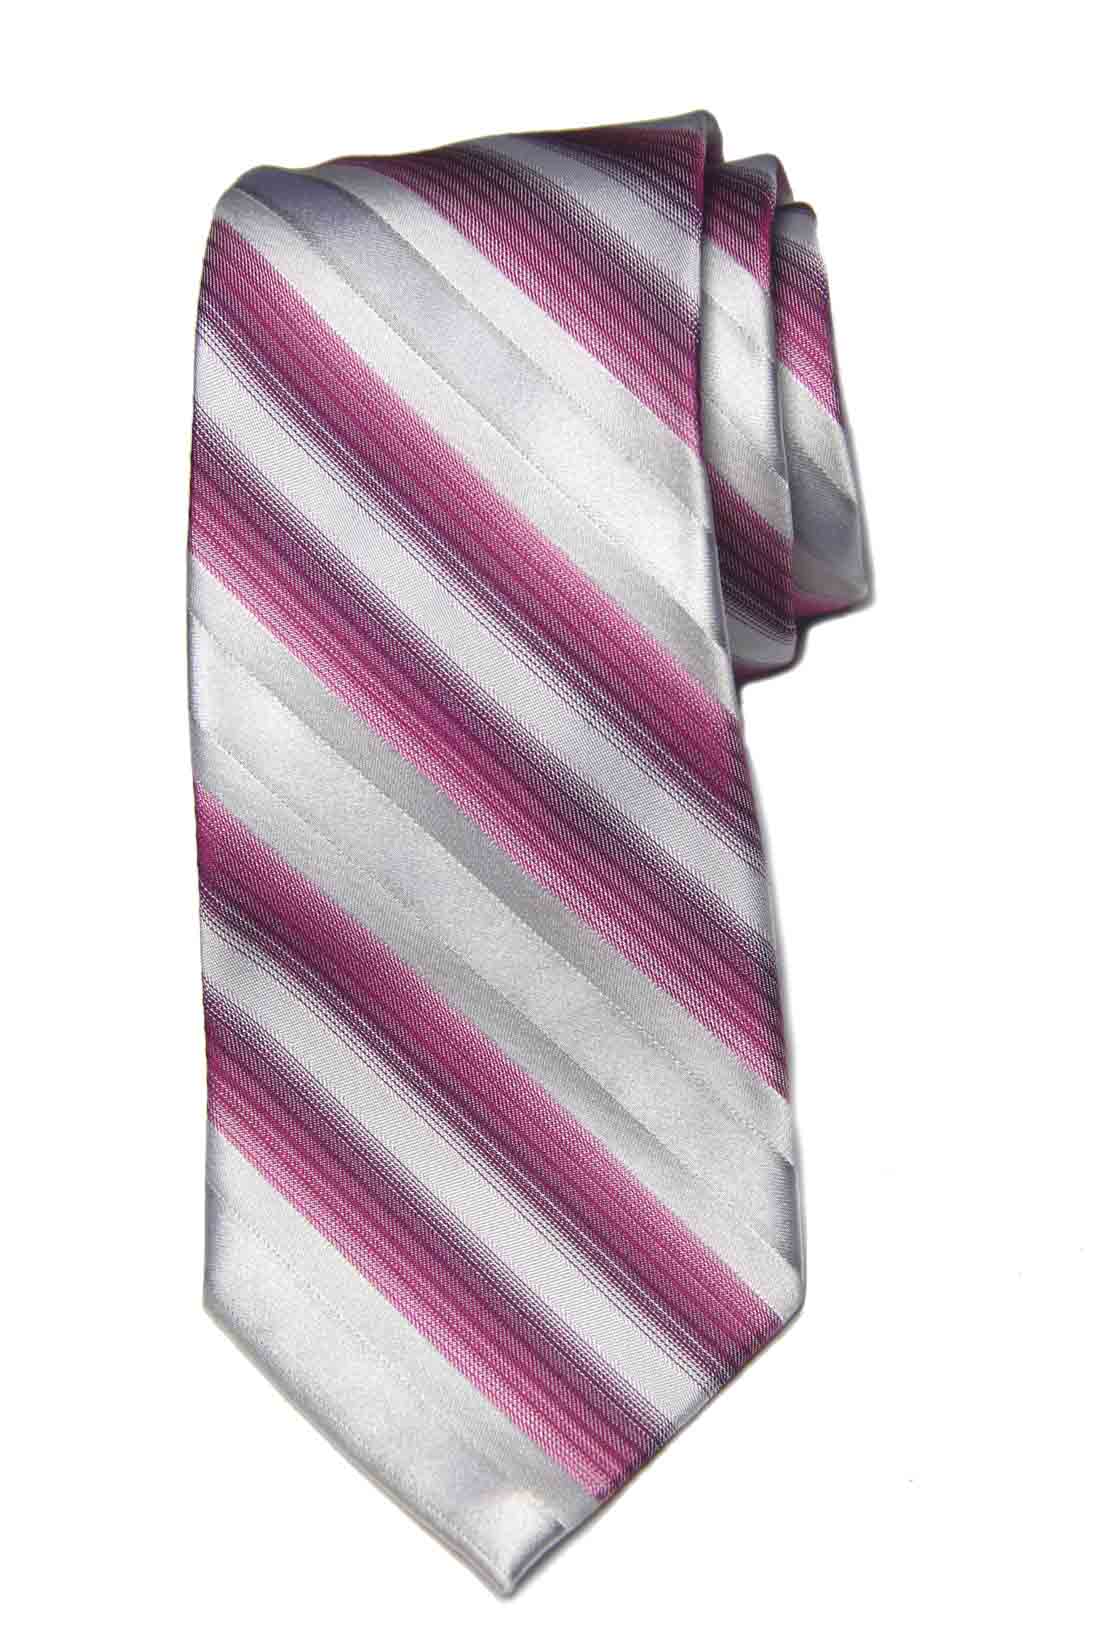 Express Silk Tie Striped White Gray Pink Purple Men's